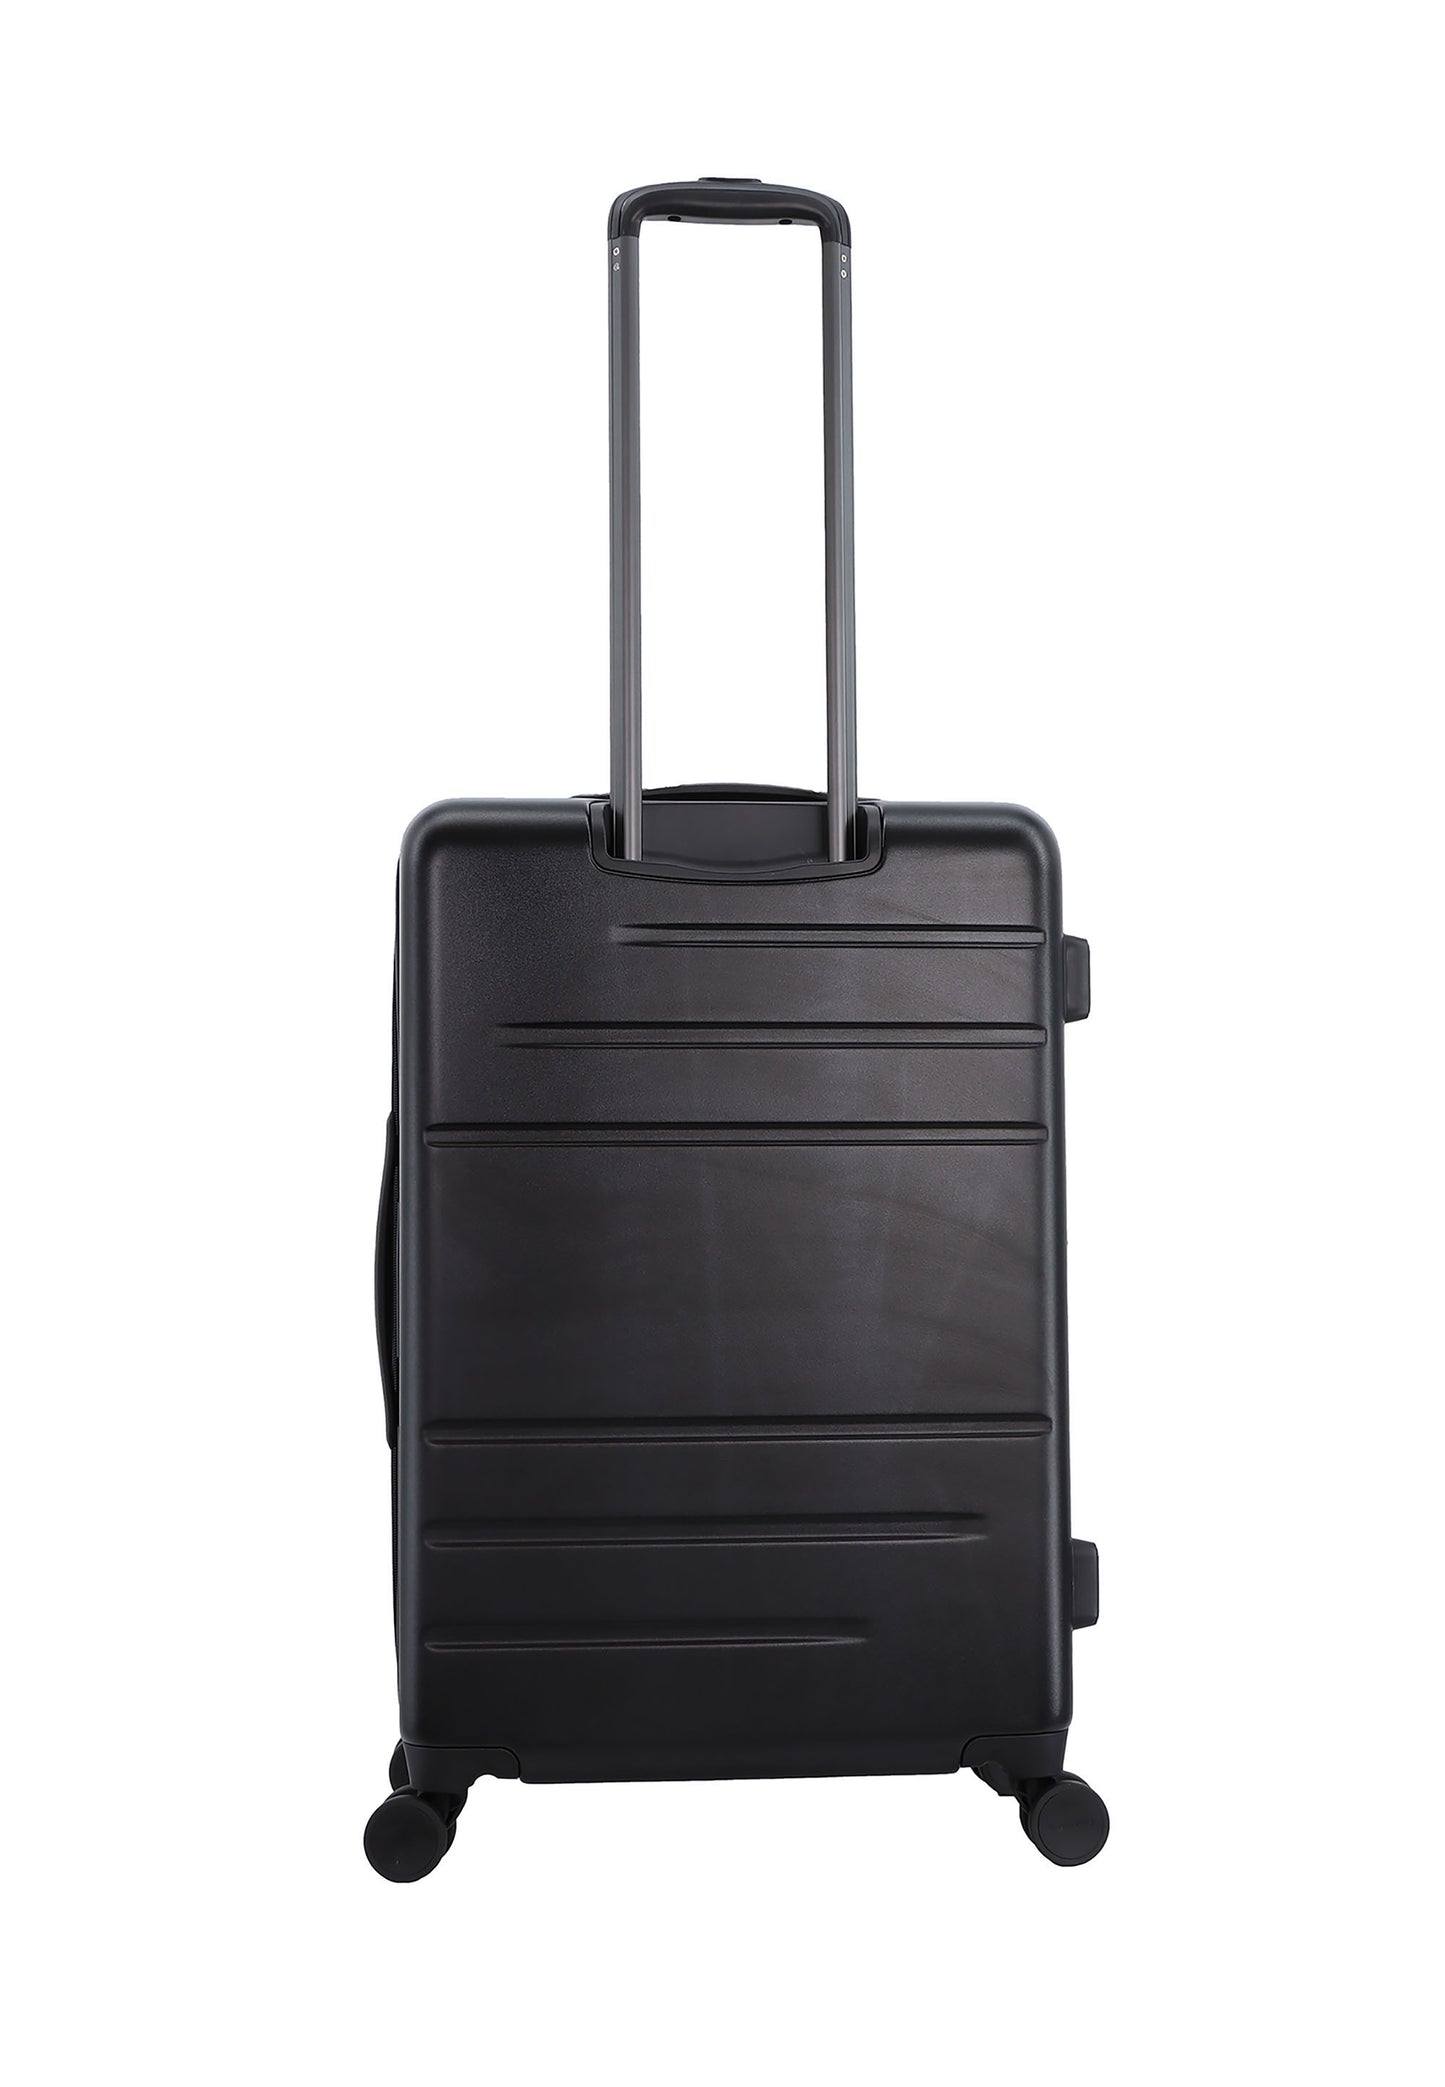 Valise rigide / trolley / valise de voyage Discovery - 67 cm (moyen) - Patrol - Anthracite